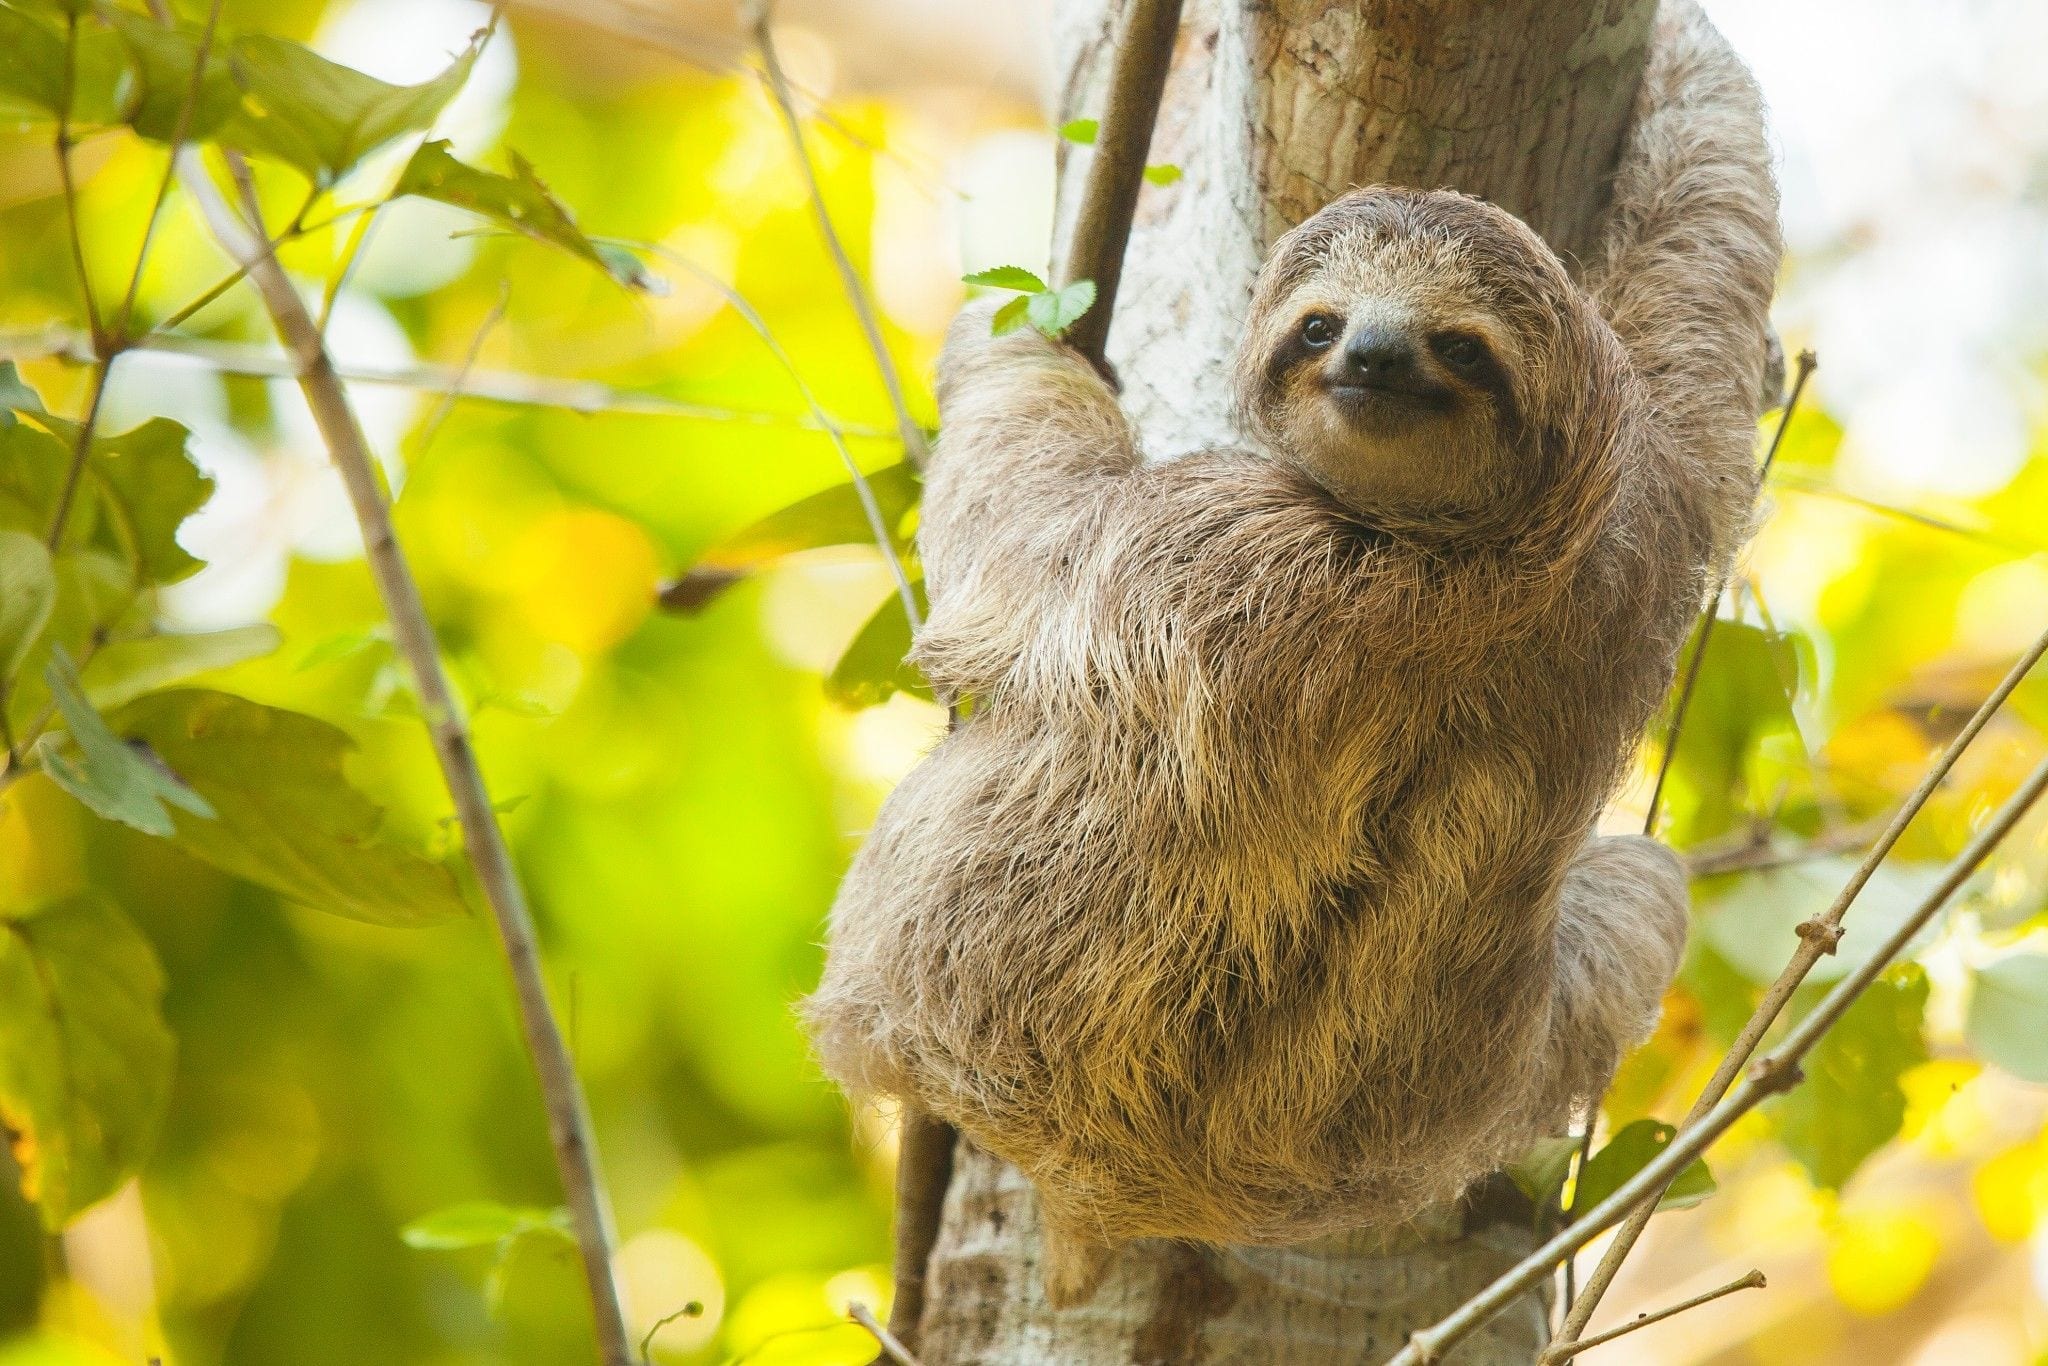 Sloth 1